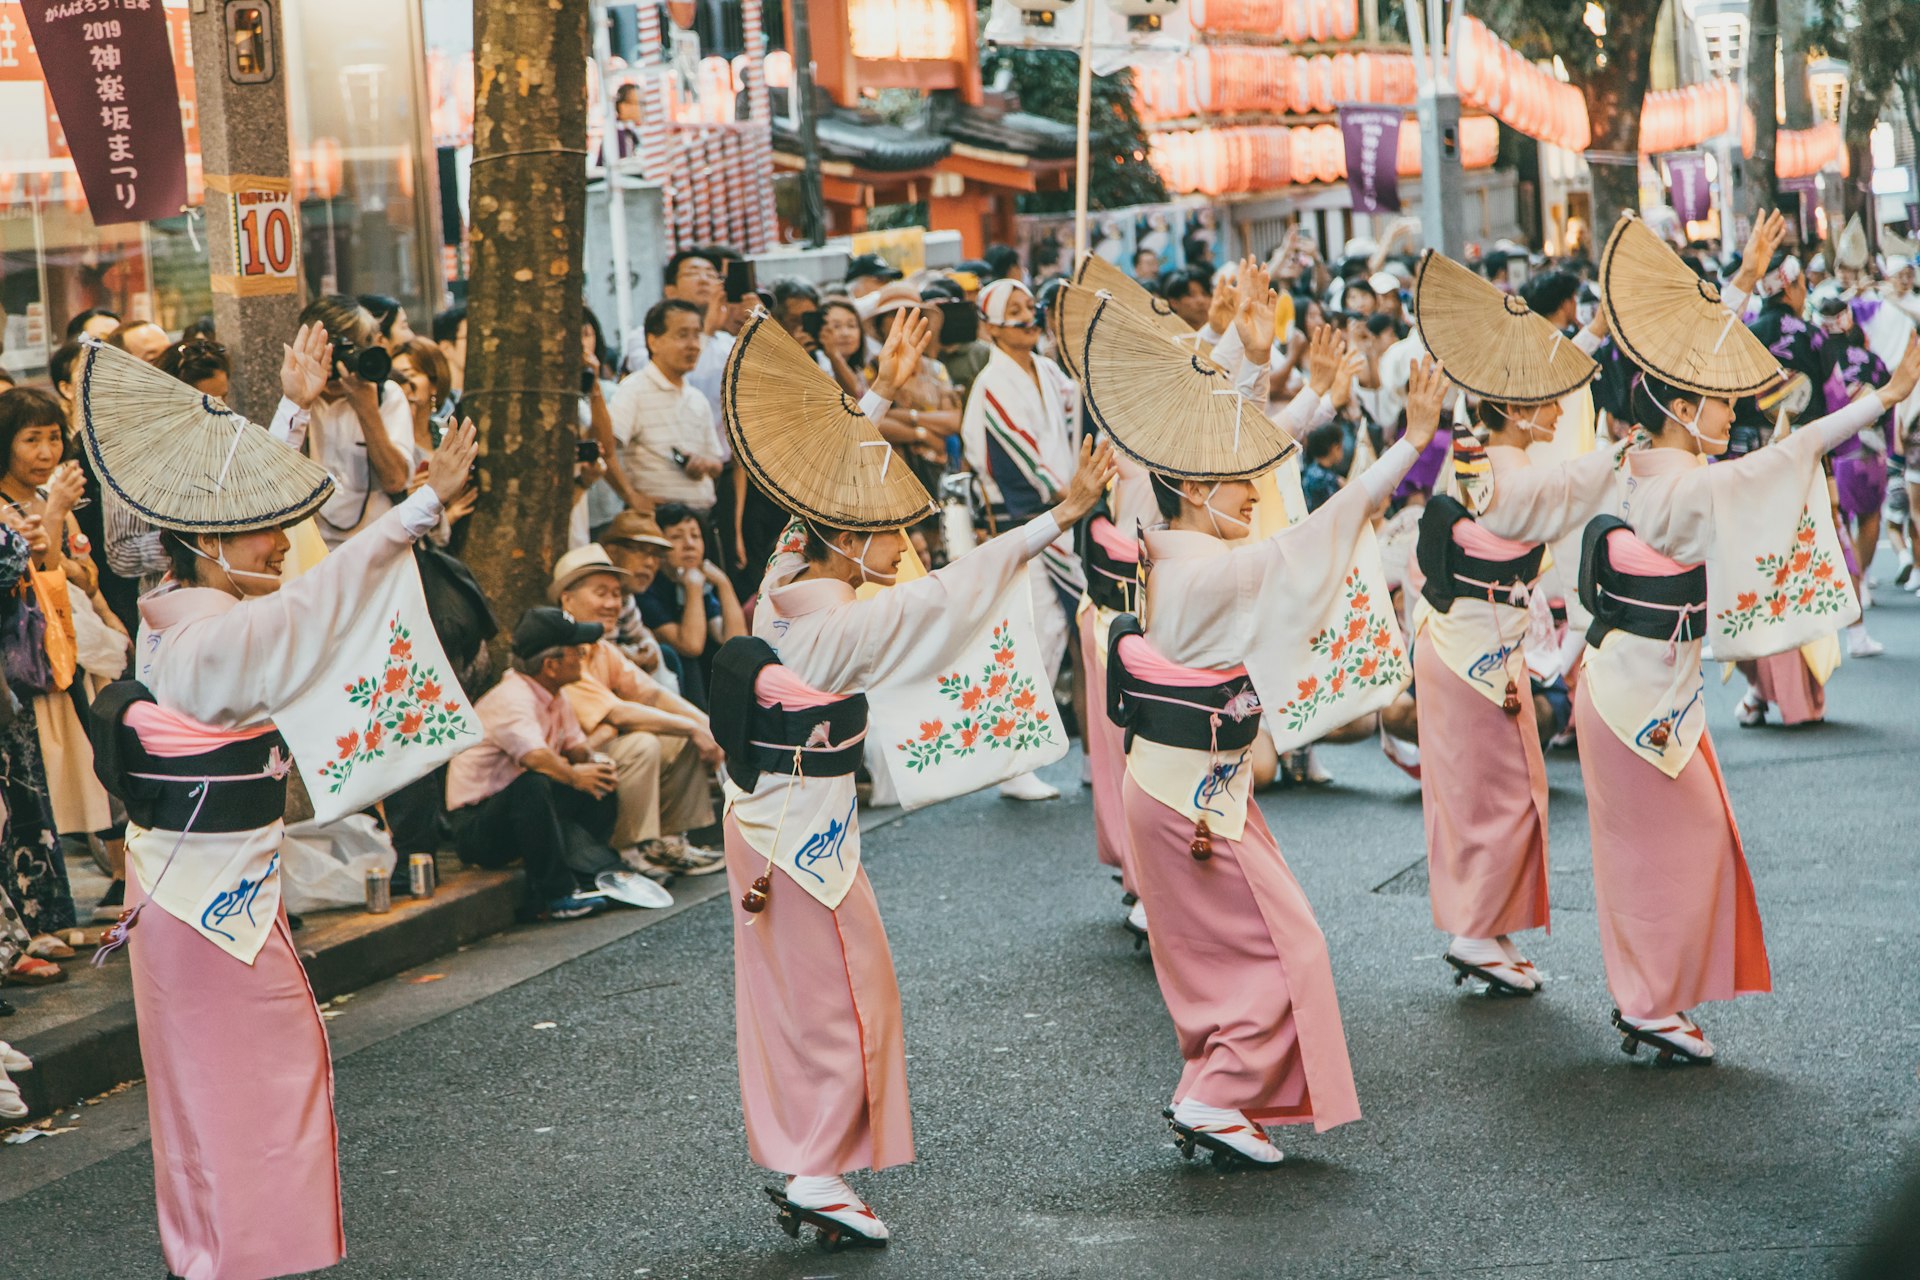 Danders during the Awa Odori festival in Kagurazaka neighborhood, Tokyo, Japan